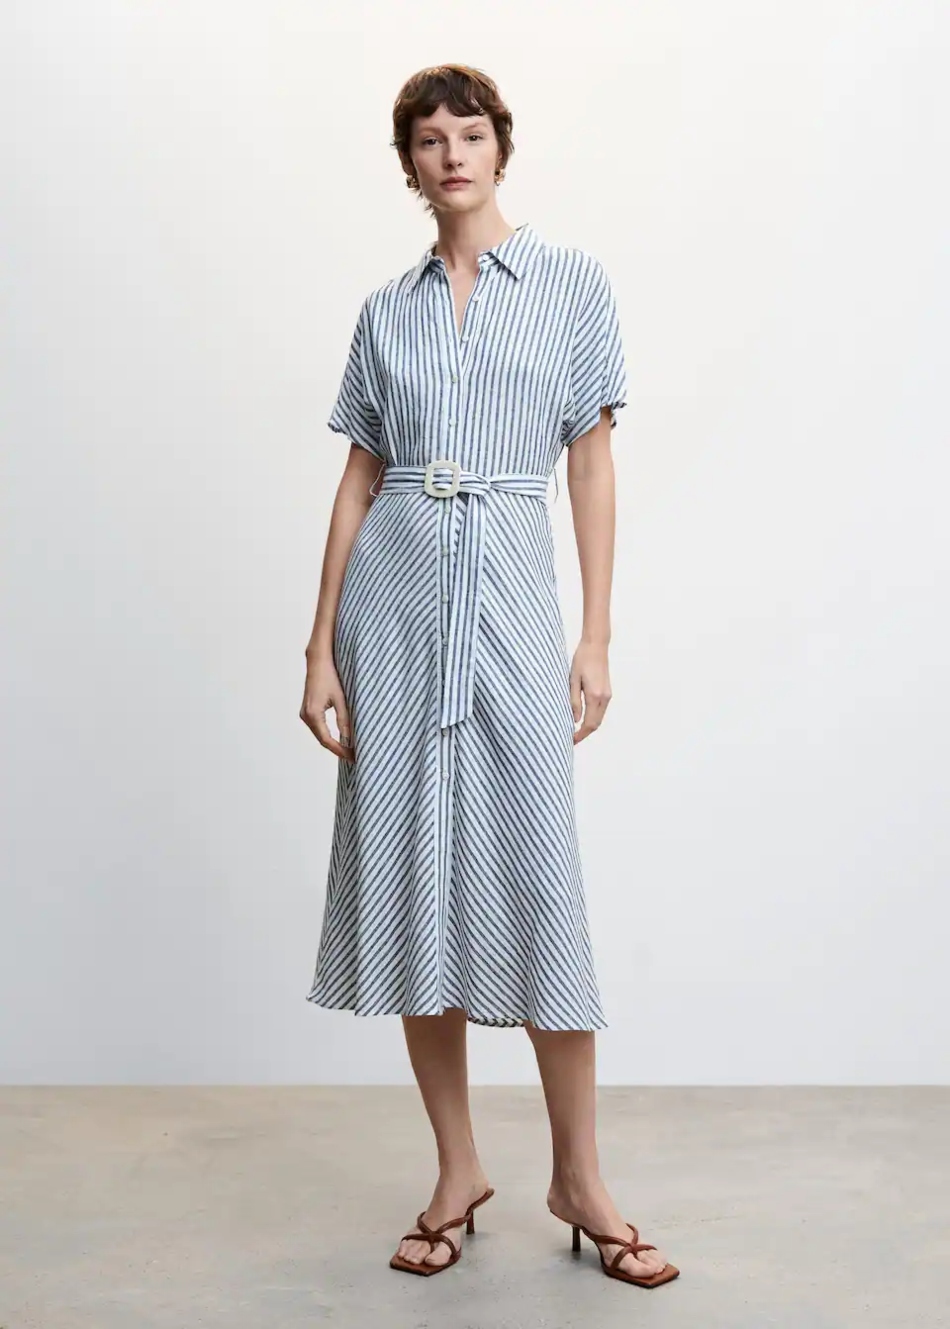 9 vestidos a rayas que más te vas a poner este verano, de Mango a Zara | Moda